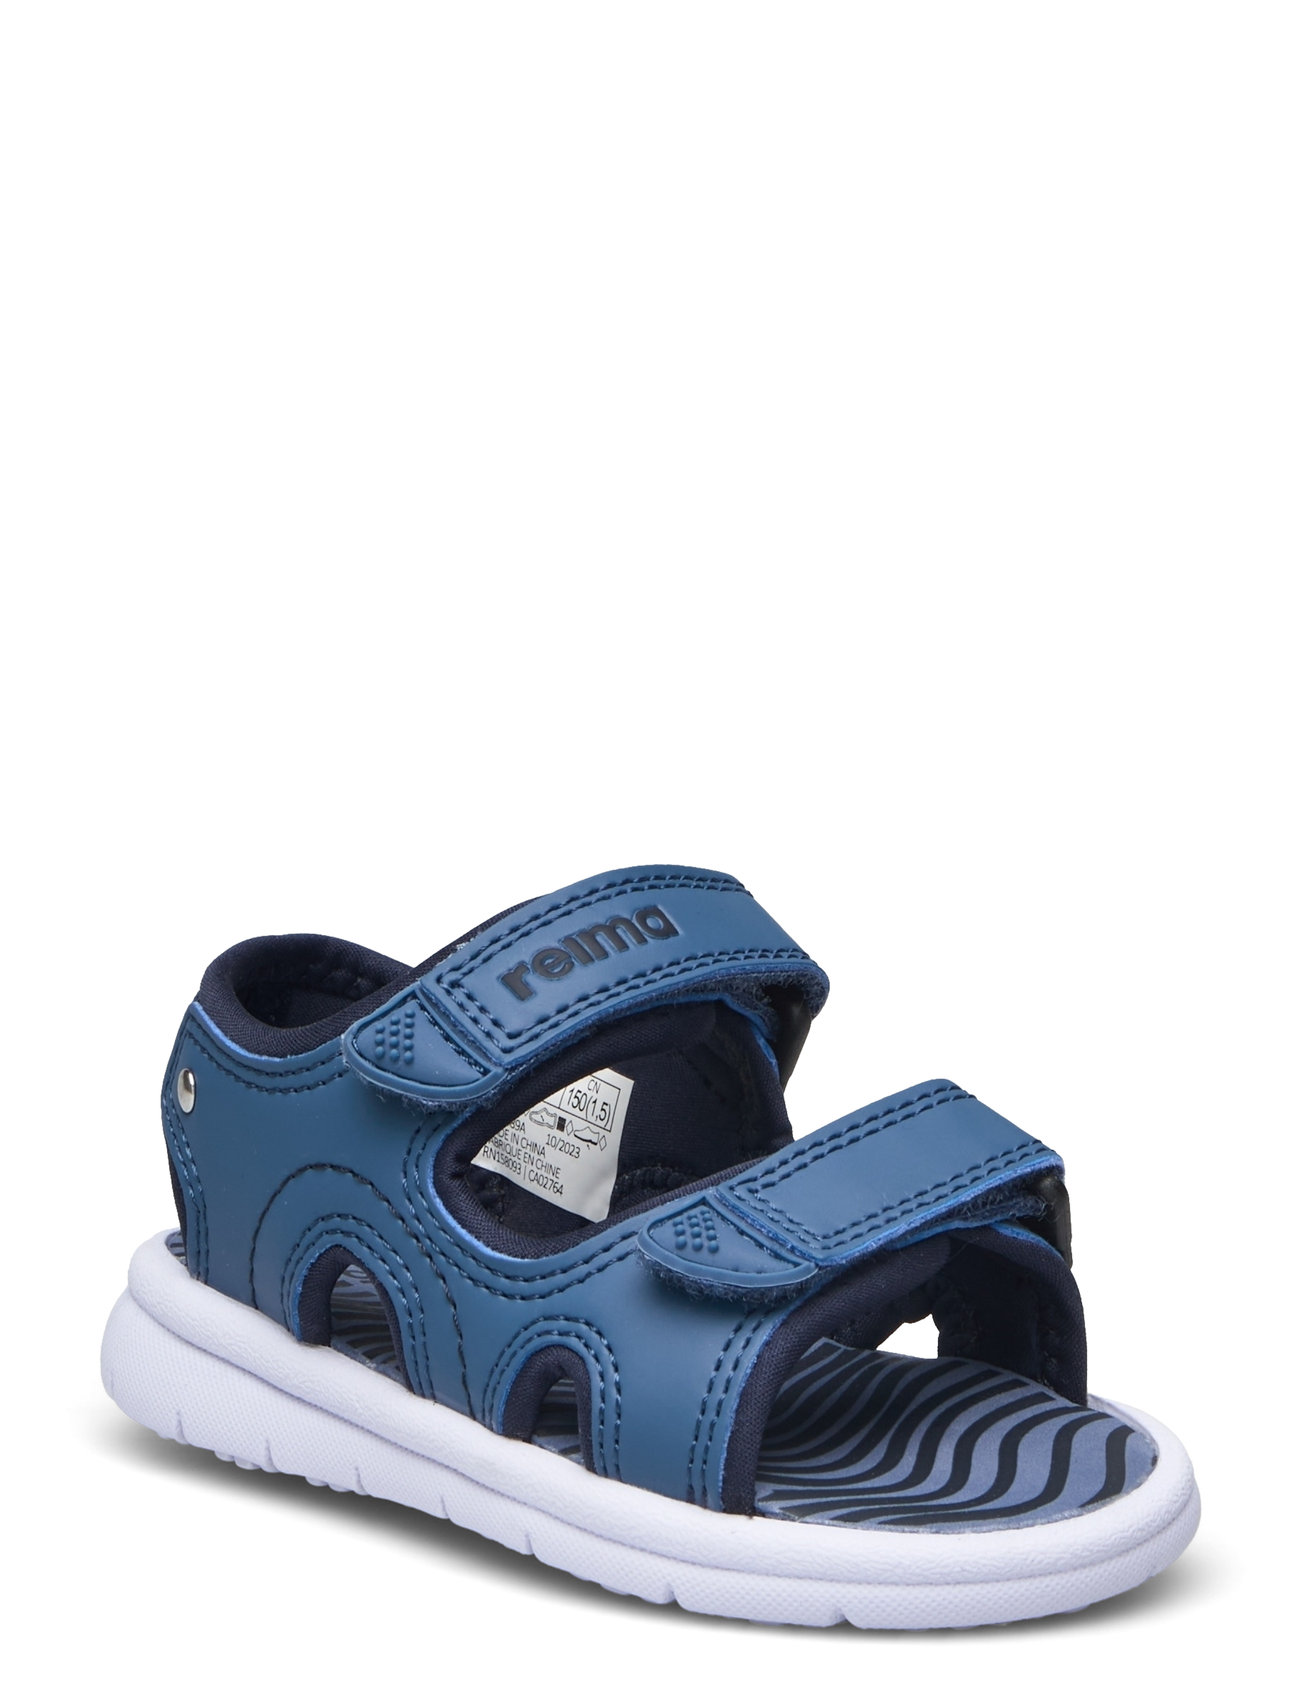 Reima Sandals Bungee Blue - Size 22